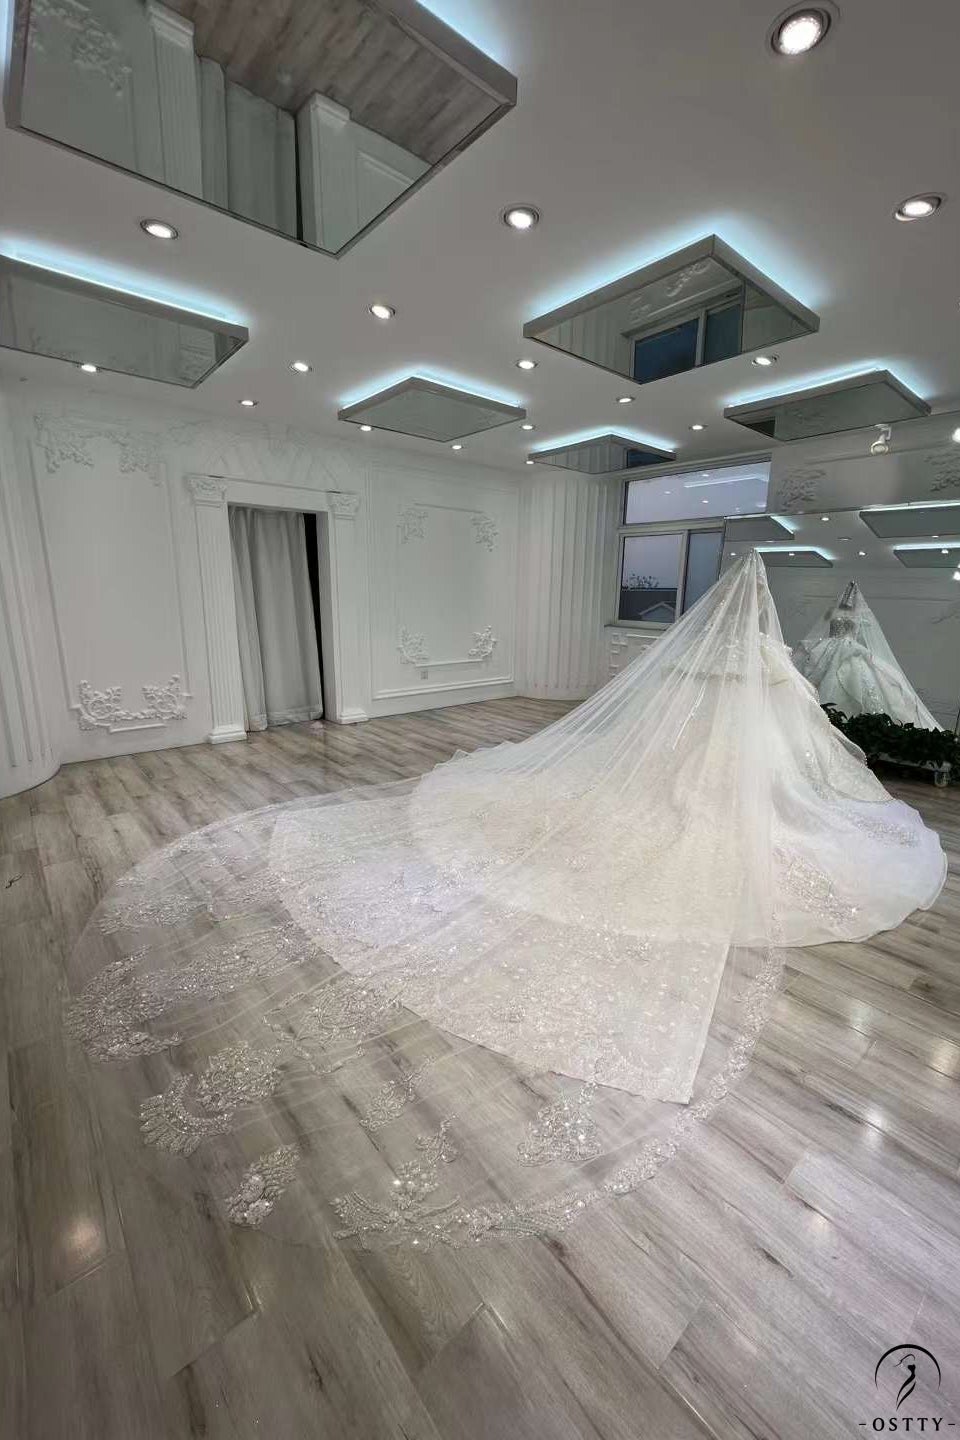 HN EXCLUSIVE L0005 - Custom Size - Wedding & Bridal Party Dresses $1,299